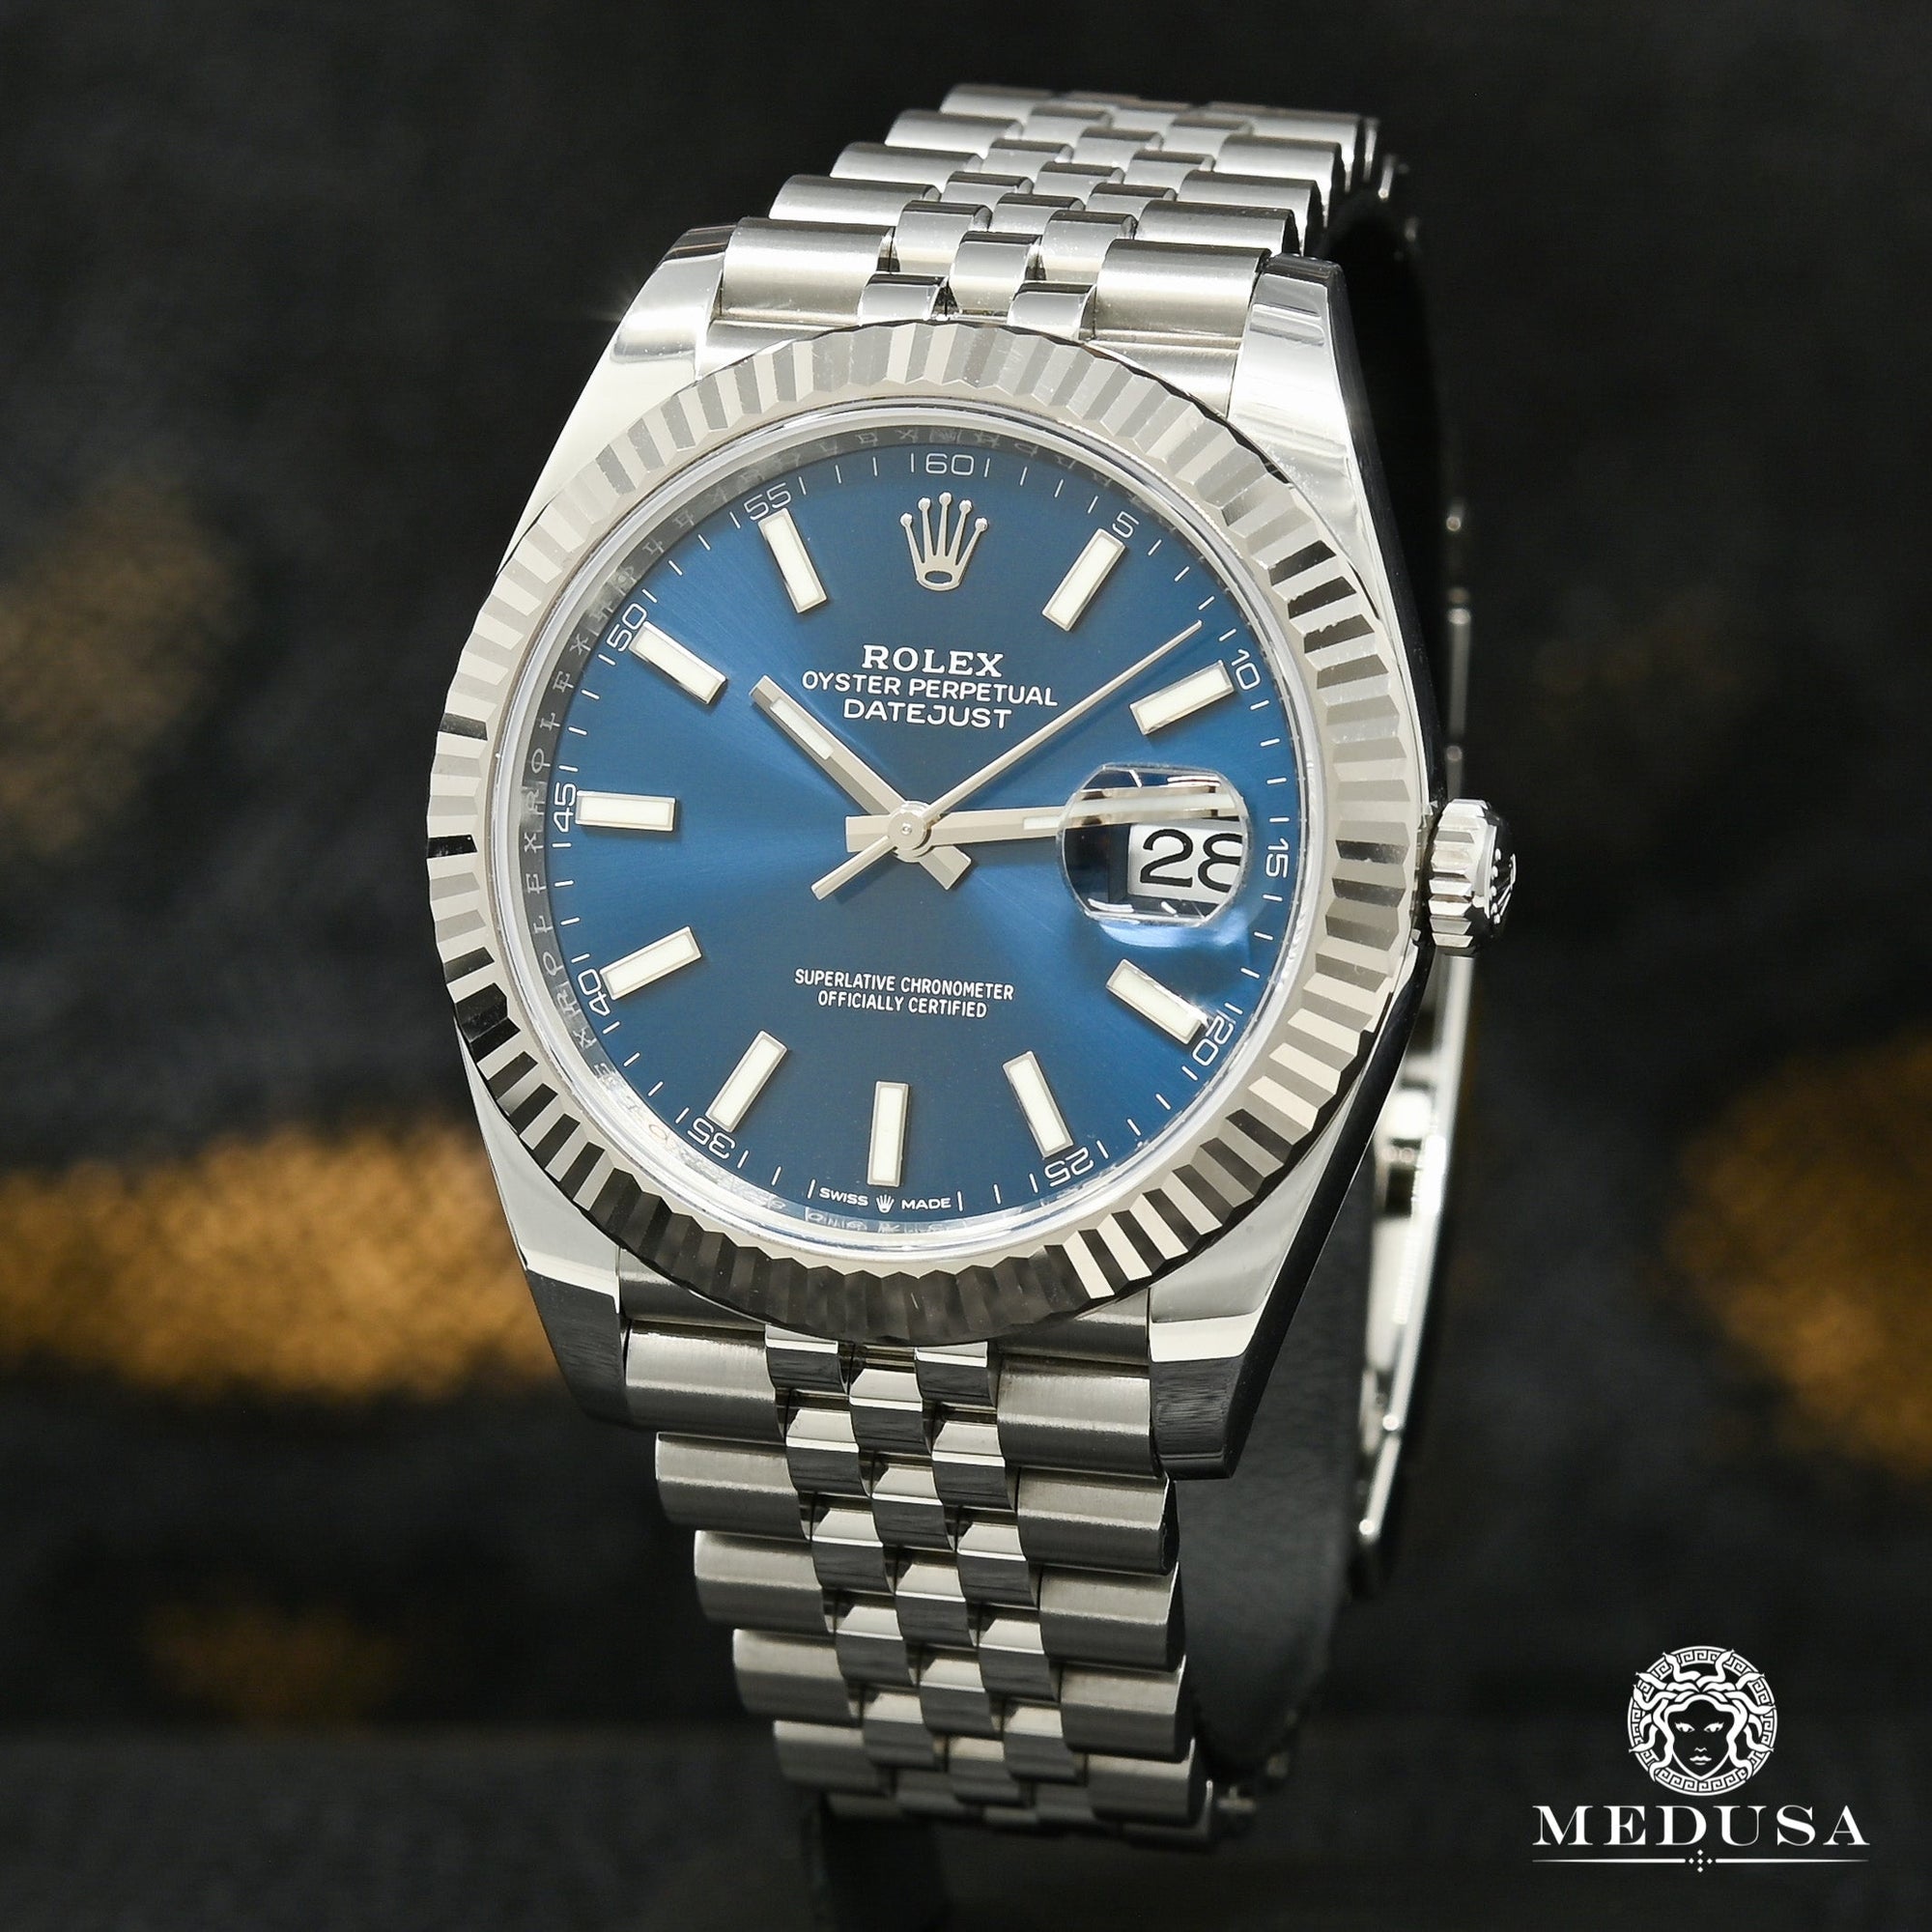 Rolex watch | Rolex Datejust Men's Watch 41mm - Jubilee Fluted Blue Stick White Gold